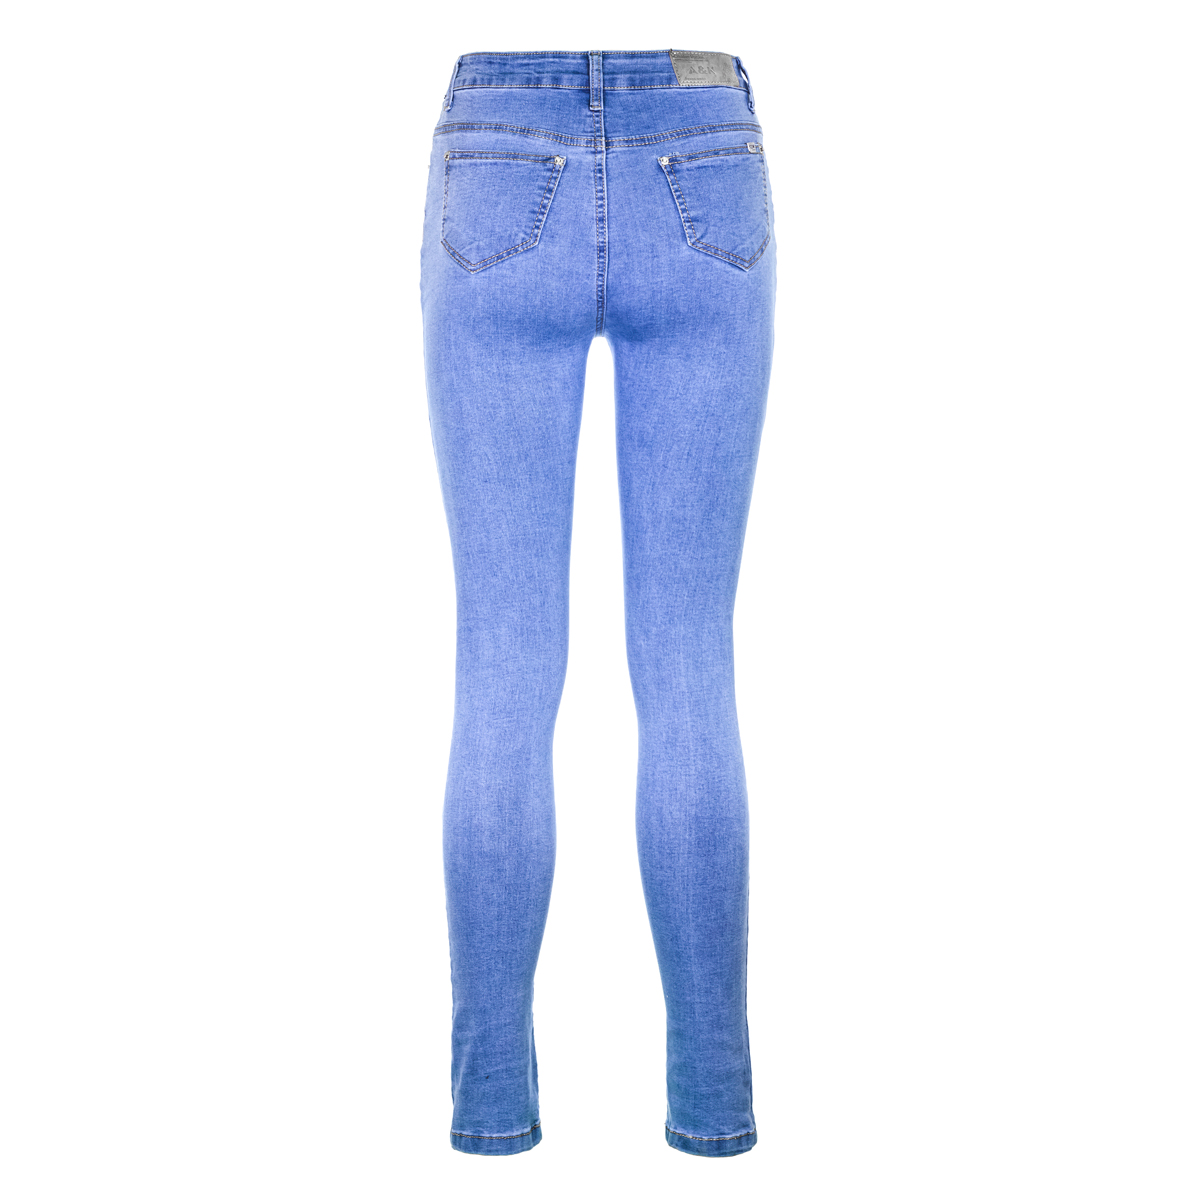 Жен. джинсы арт. 12-0155 Голубой р. 27 от Rastl